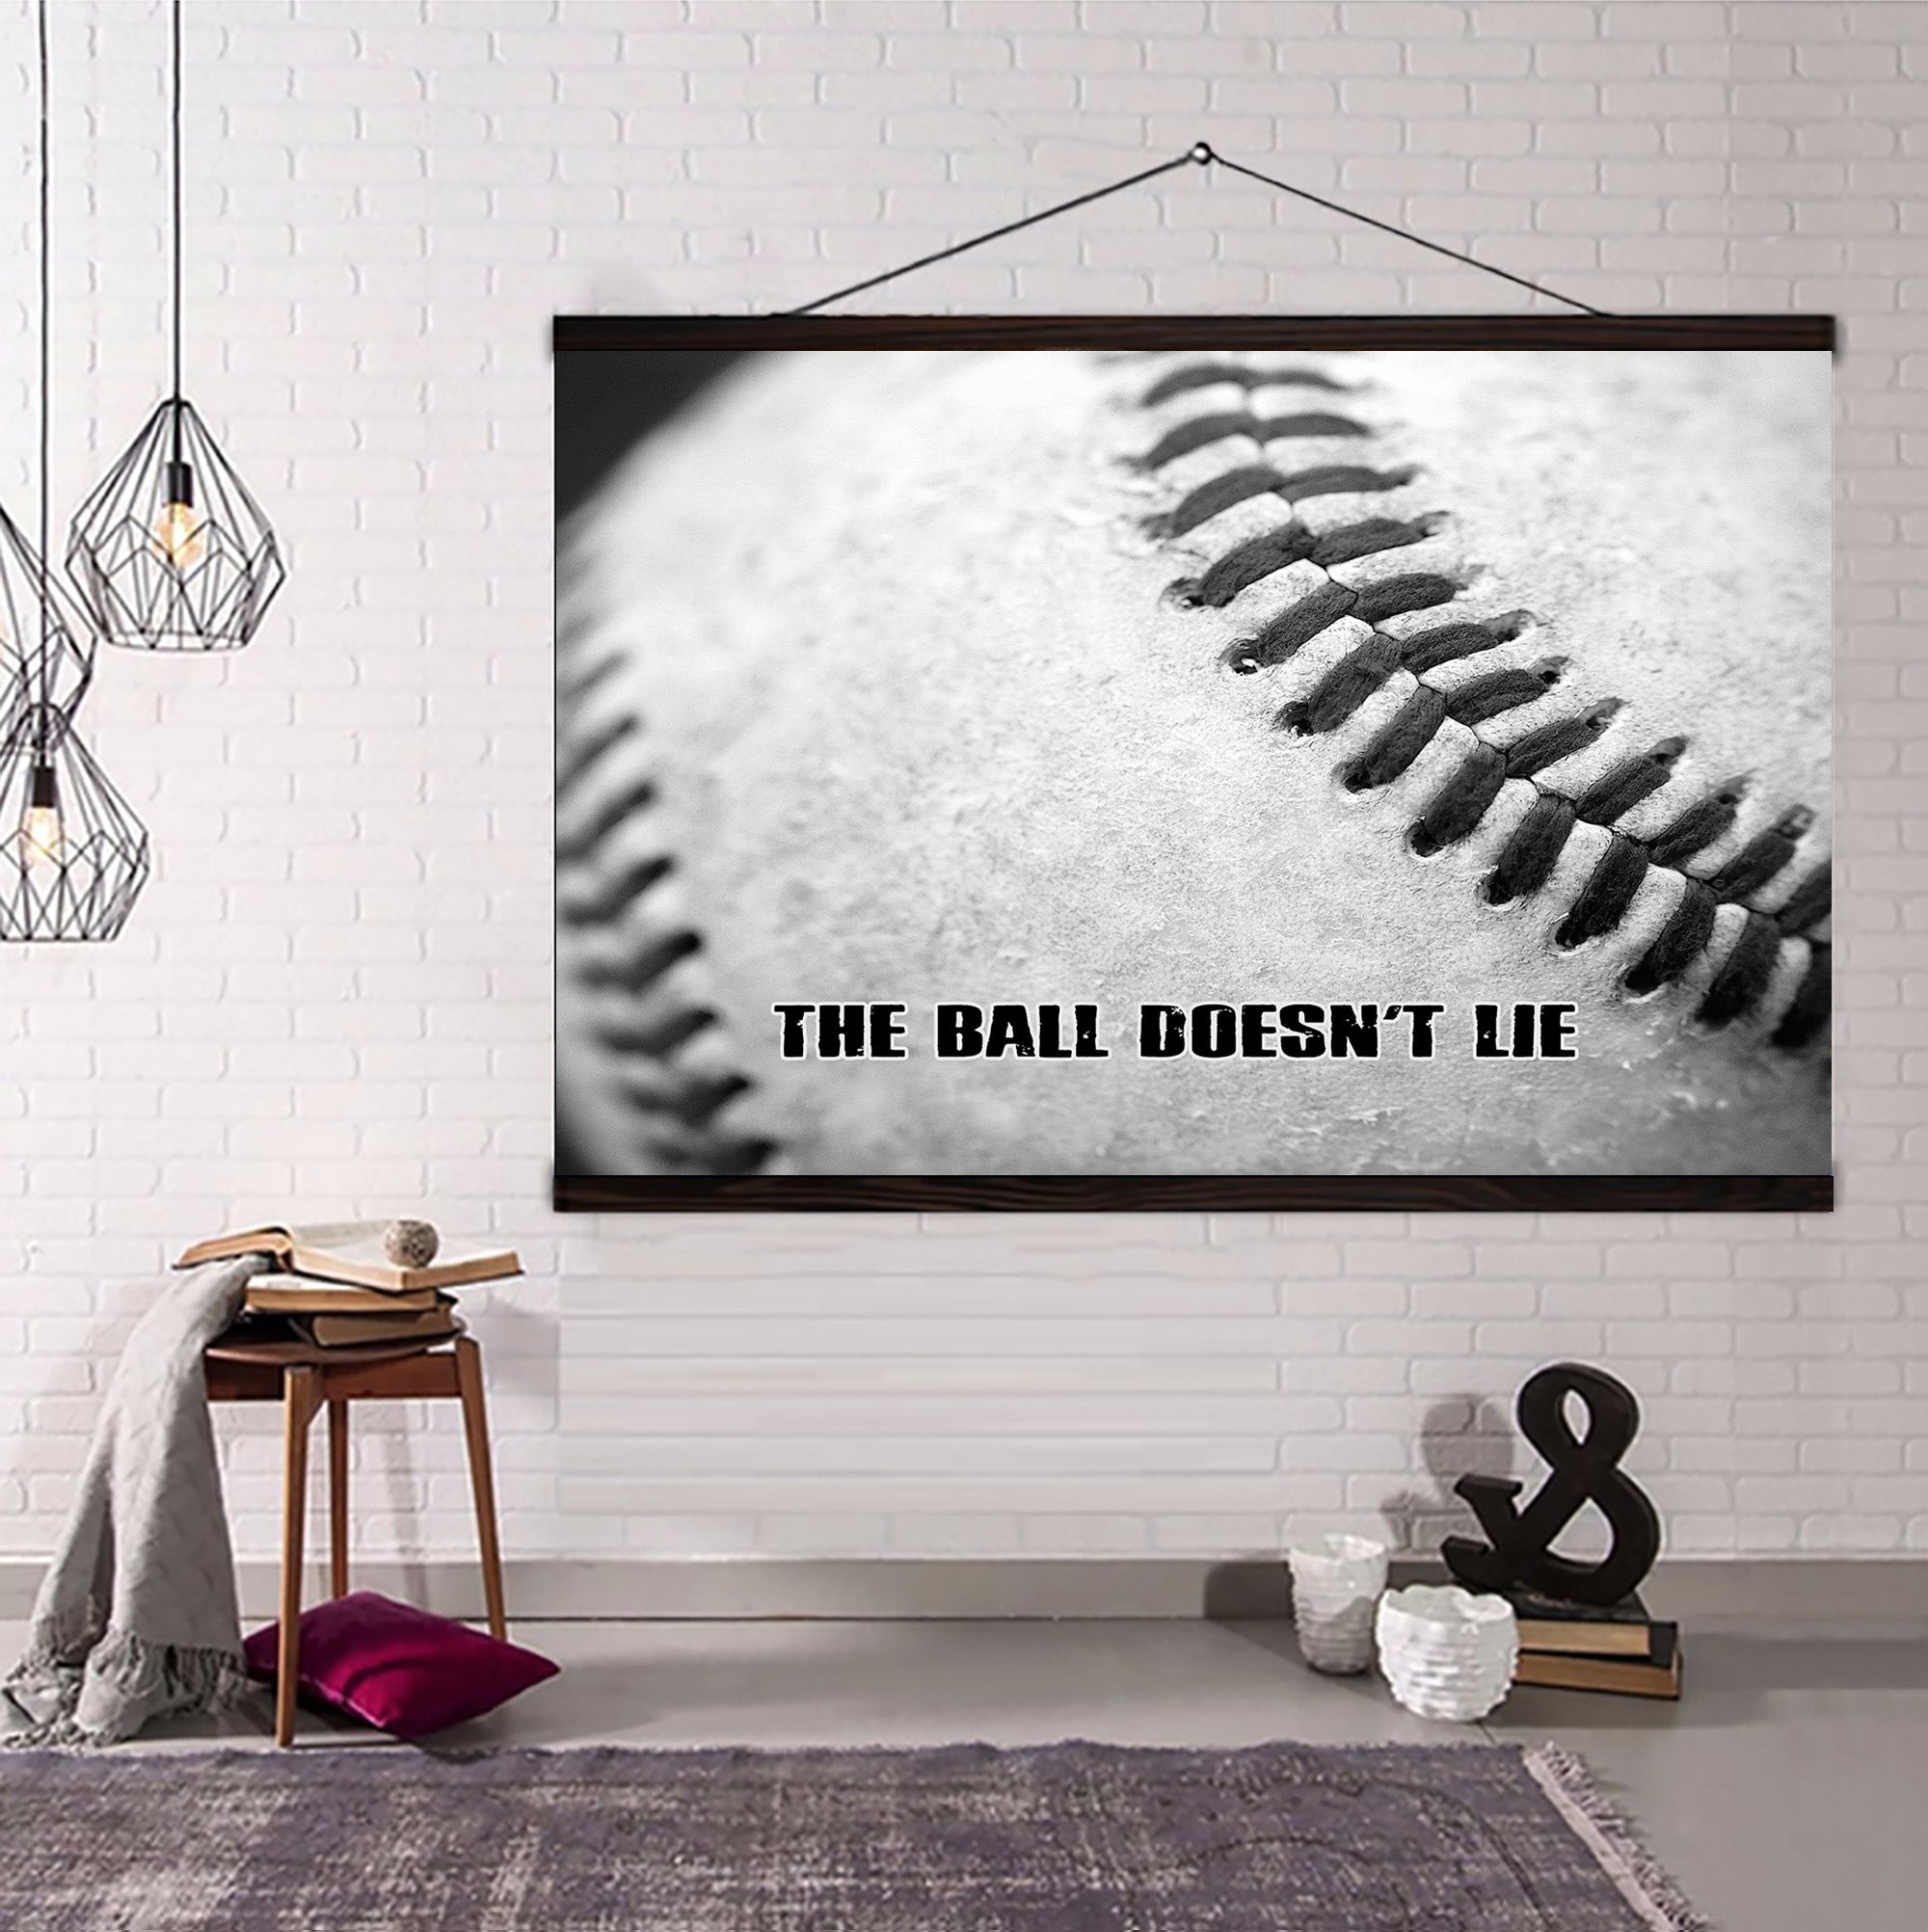 Baseball Poster - The ball doesn't lie